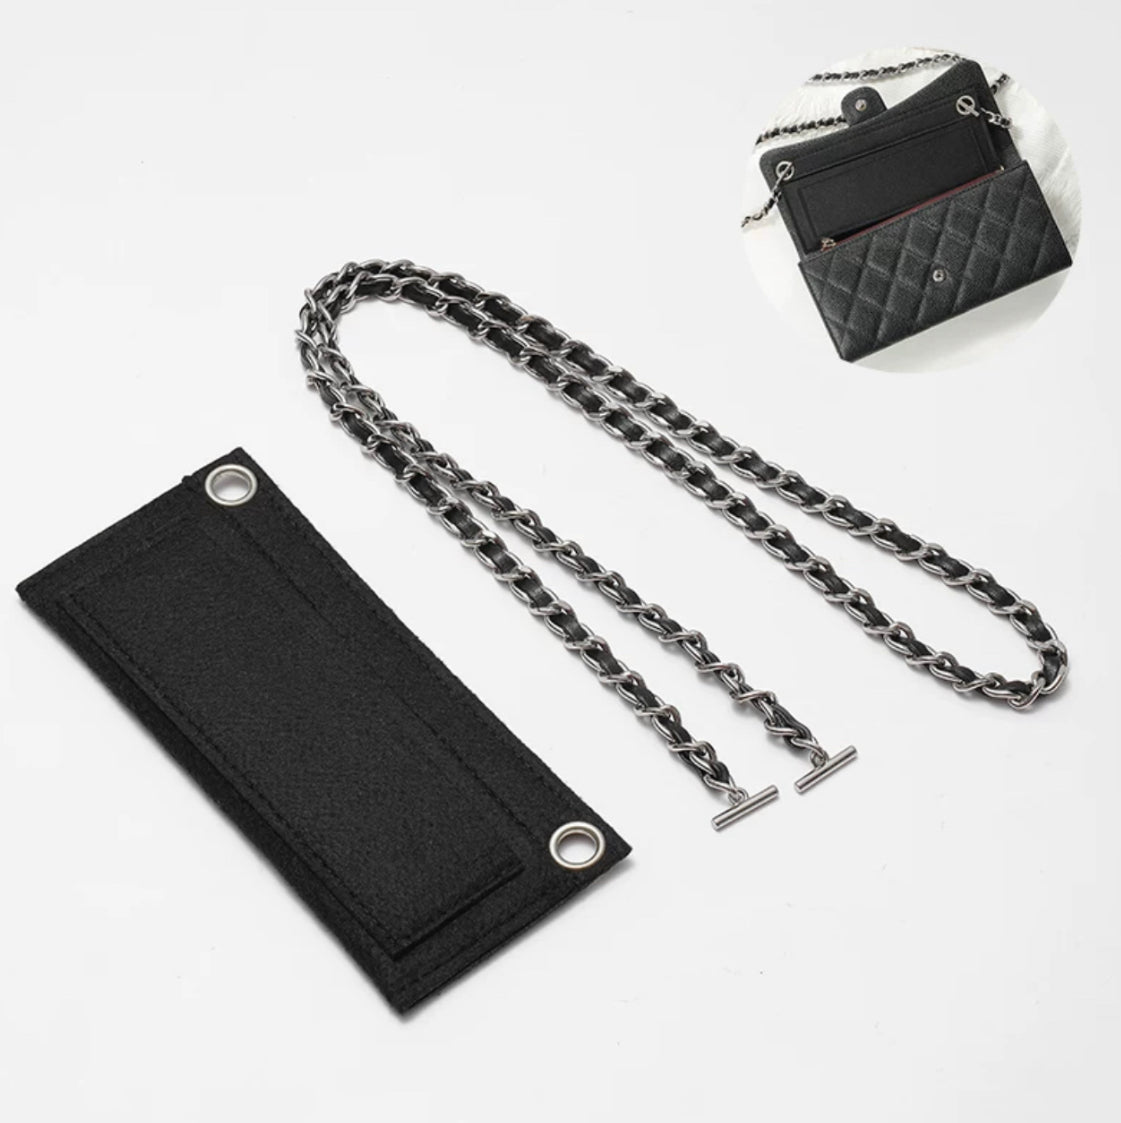 Convert Chanel wallet to WOC crossbody 